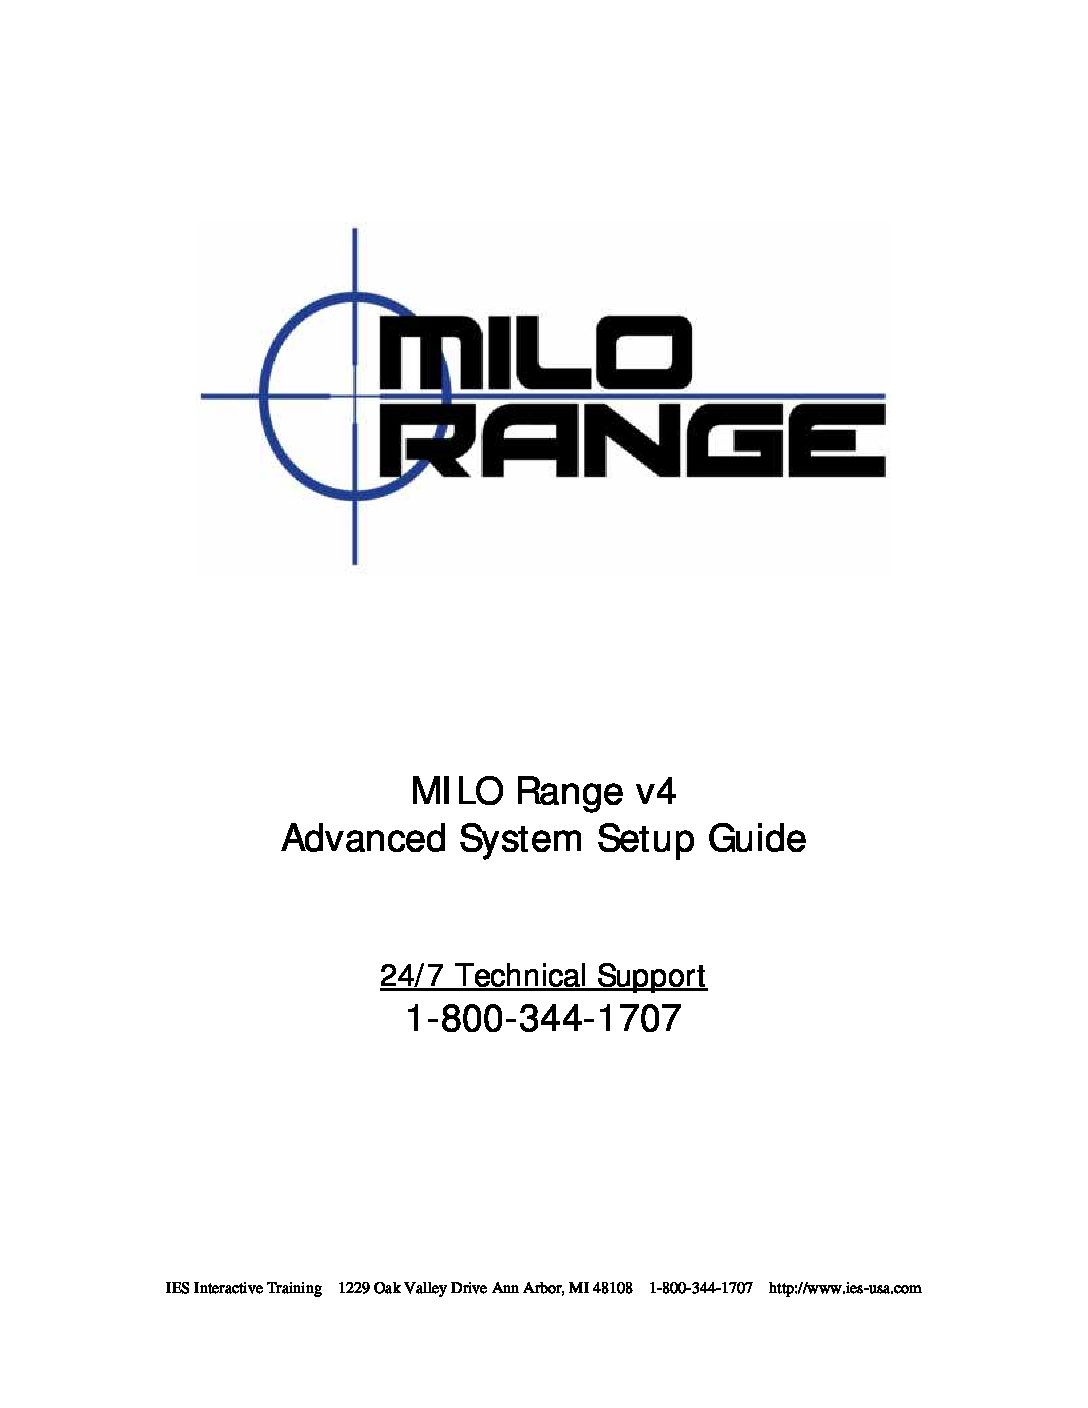 MILO Range v4 Advanced Setup Guide